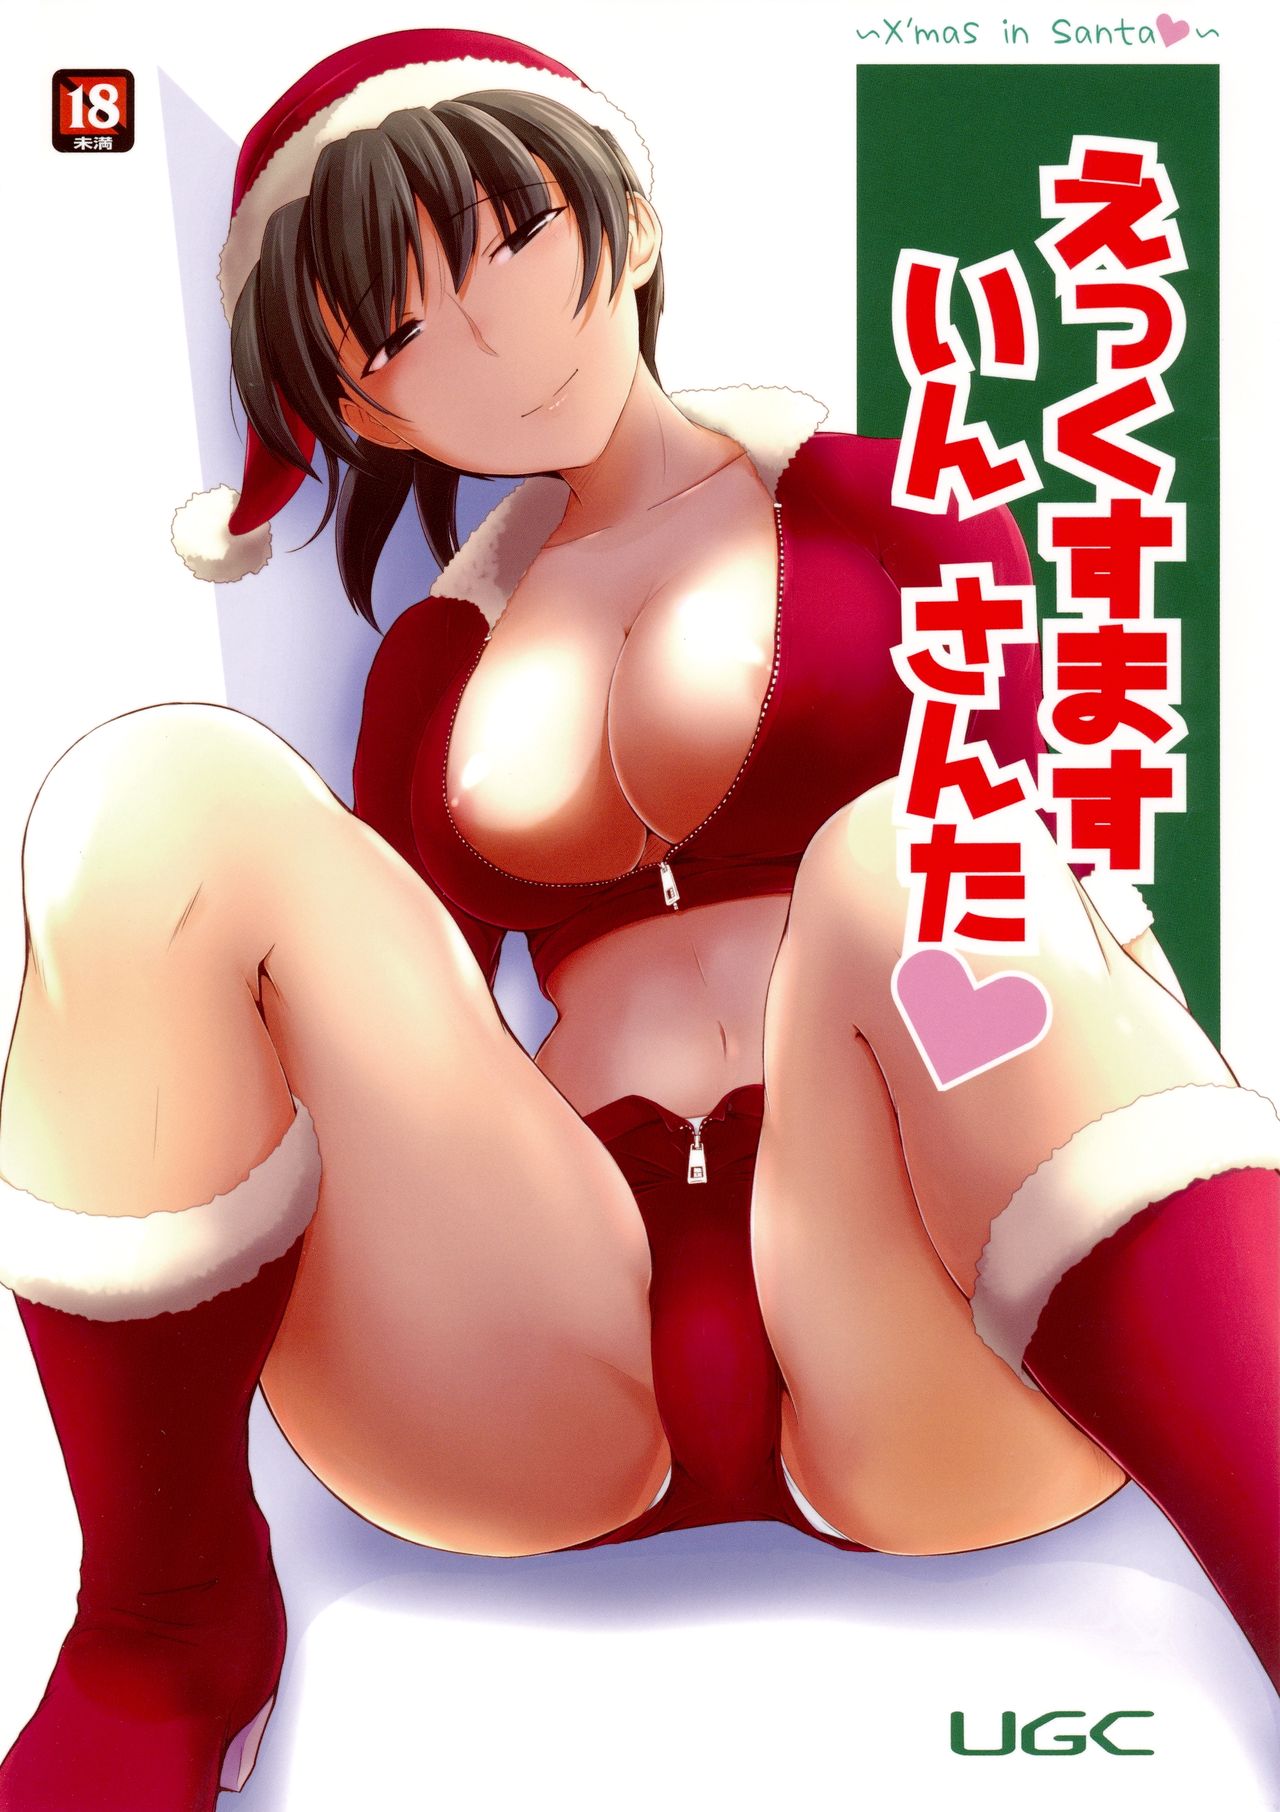 Sasaki Akira - X' mas in Santa Hentai Comics